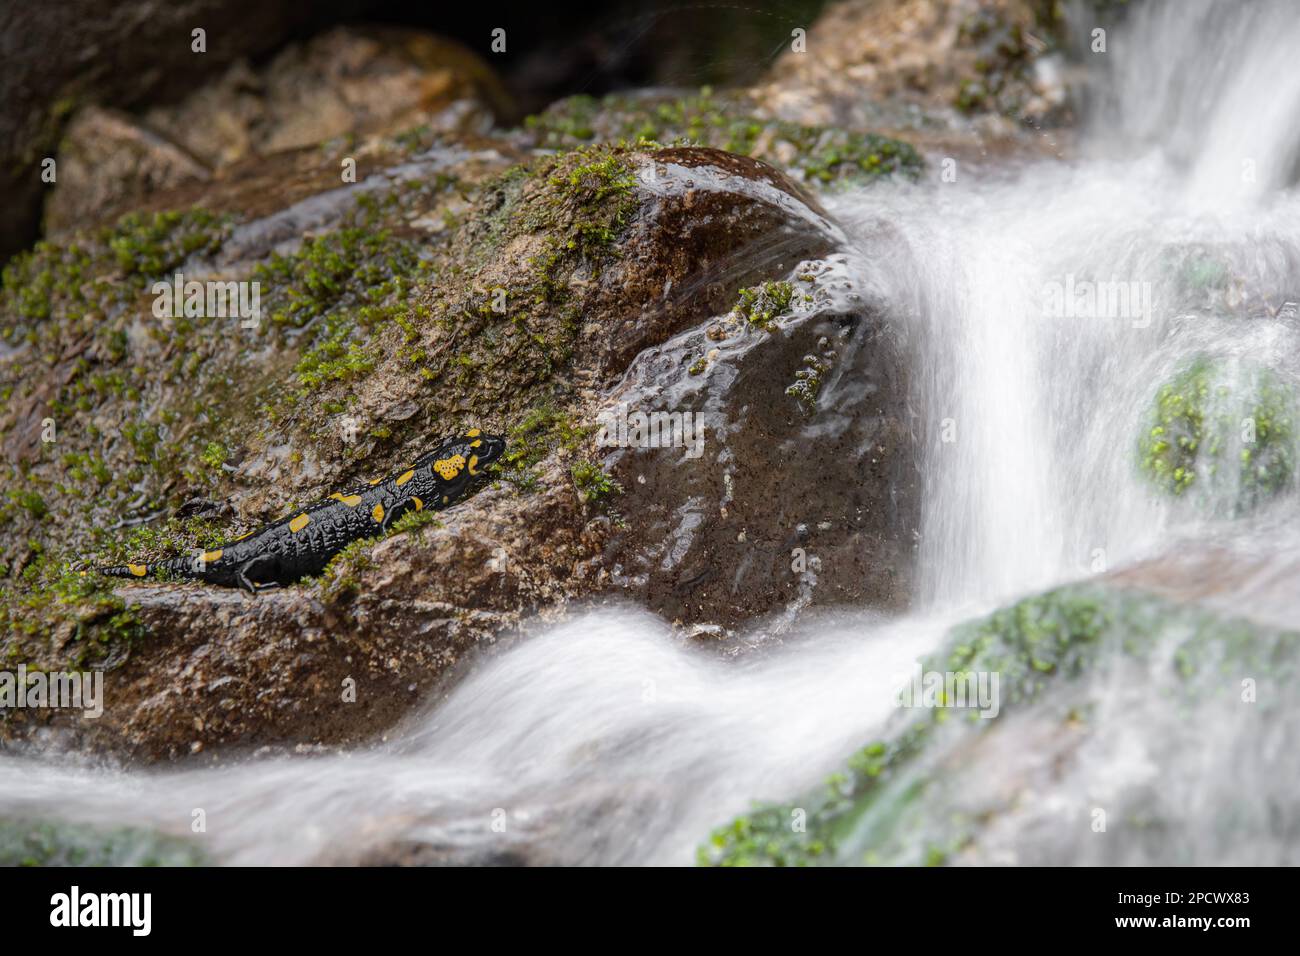 Fine art portrait of fire salamander on mountain creek (Salamandra salamandra) Stock Photo